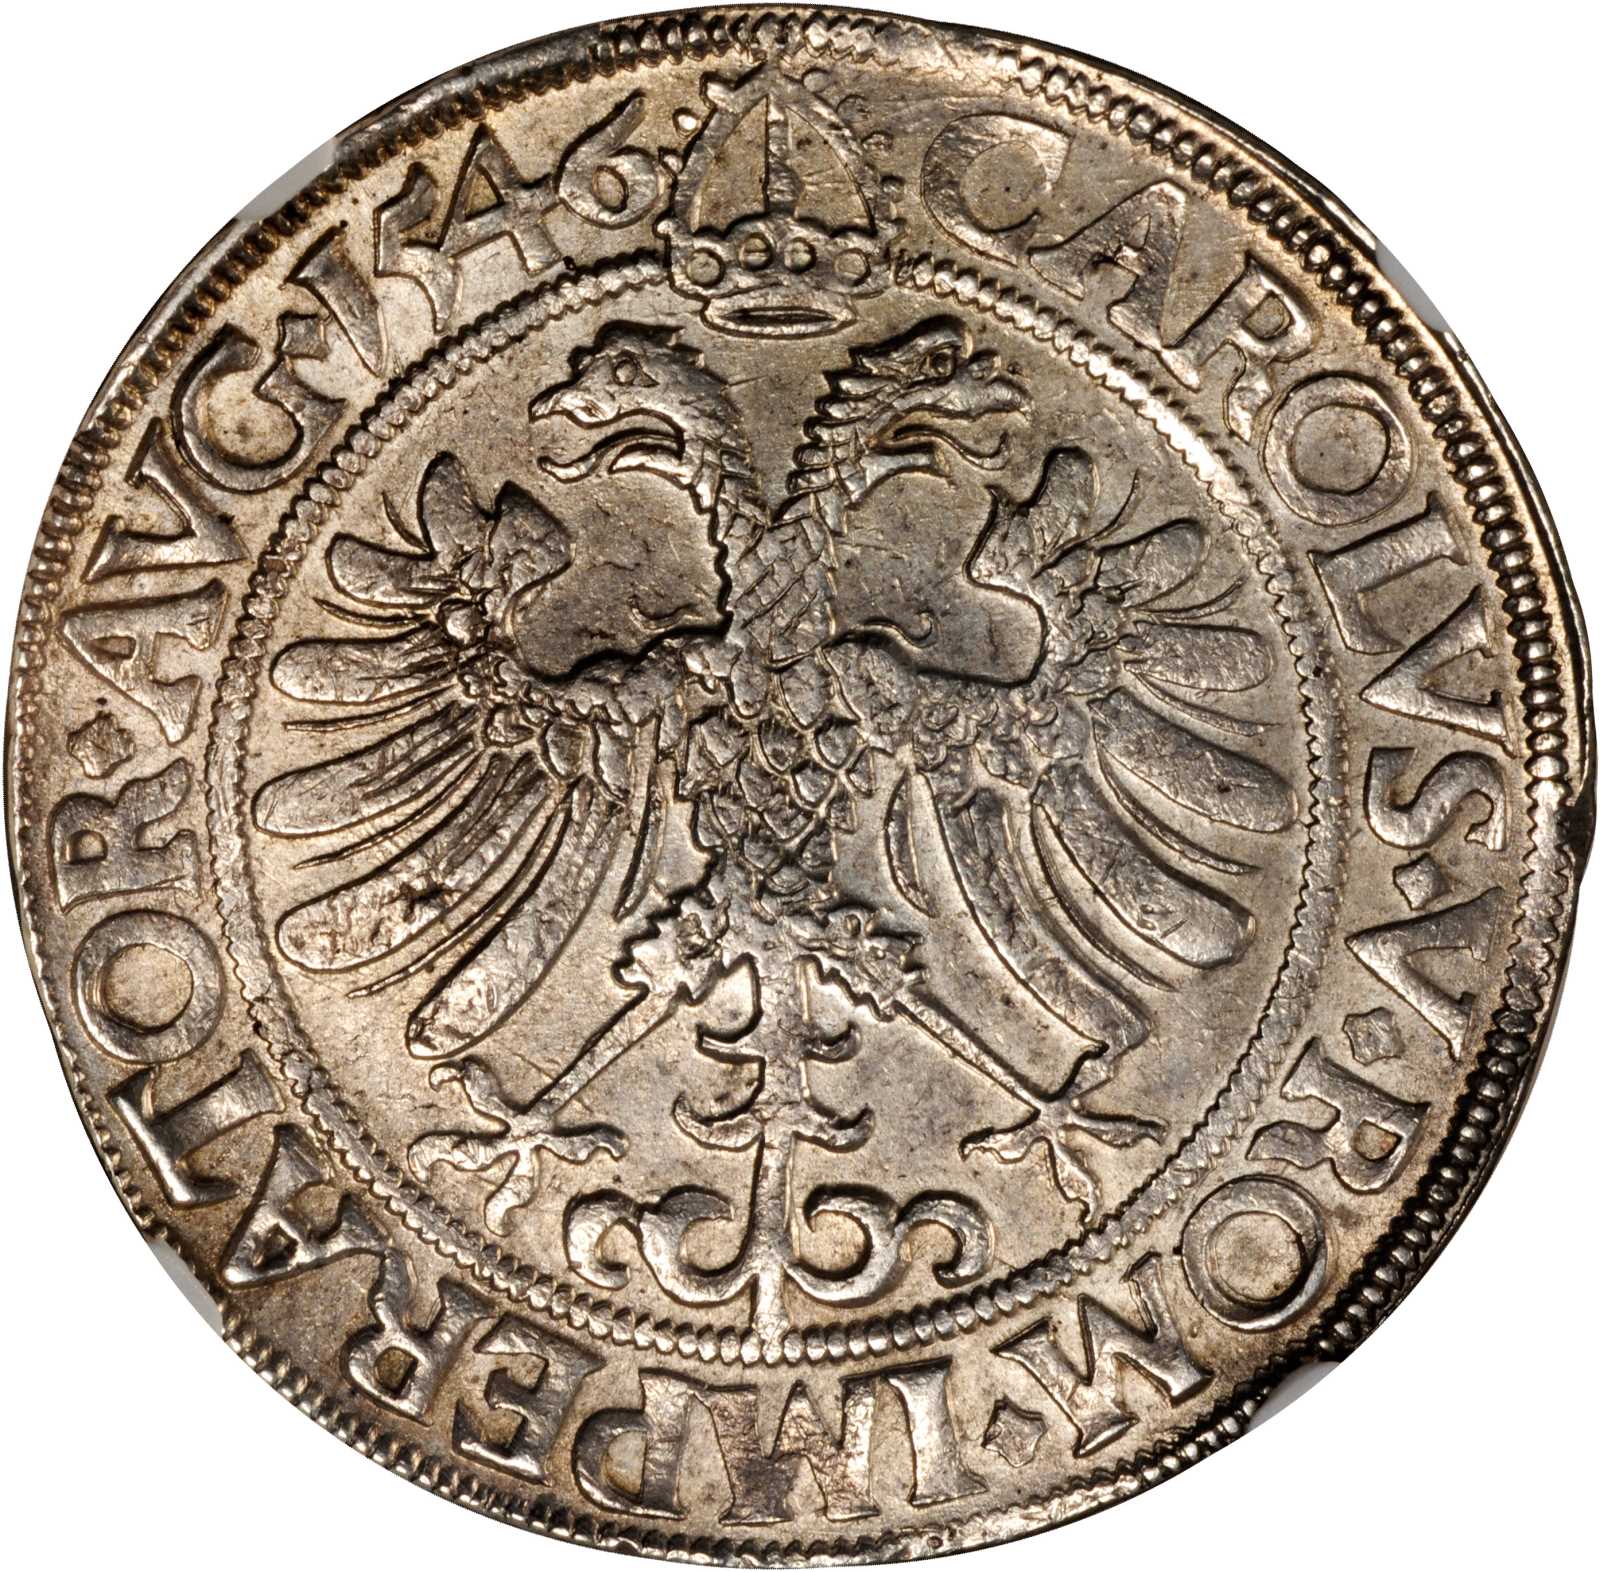 GERMANY. Murbach & Luder. Taler, 1546. Abbet Johann Rudolf Stor von  Storenberg (1542-70). NGC MS-61.